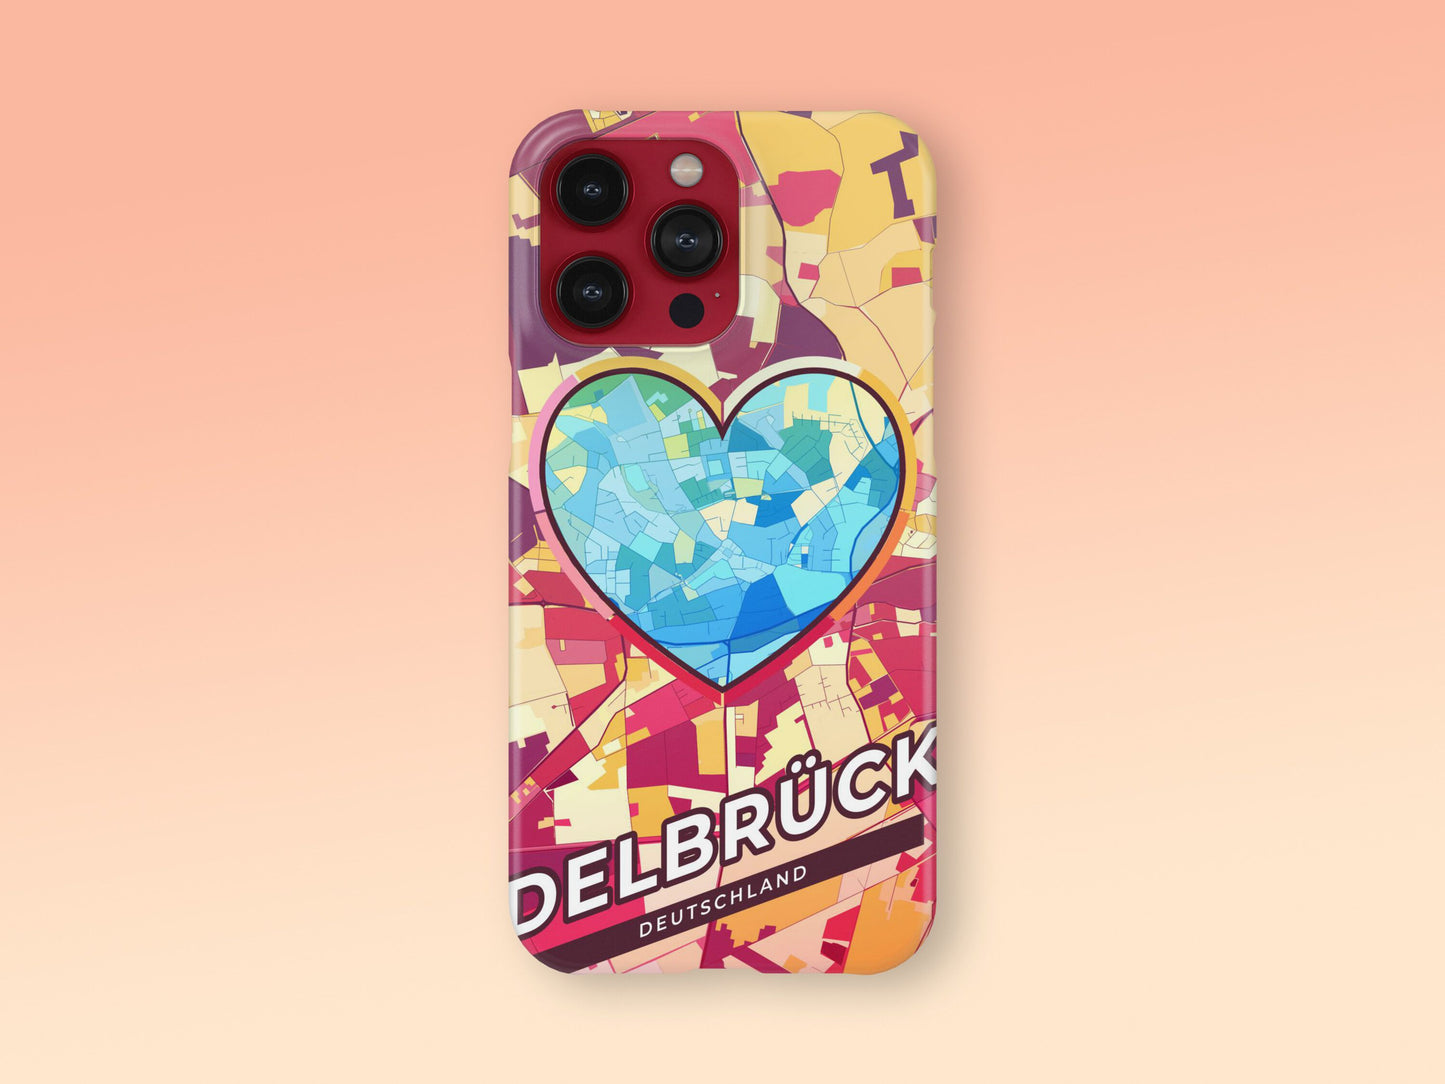 Delbrück Deutschland slim phone case with colorful icon. Birthday, wedding or housewarming gift. Couple match cases. 2